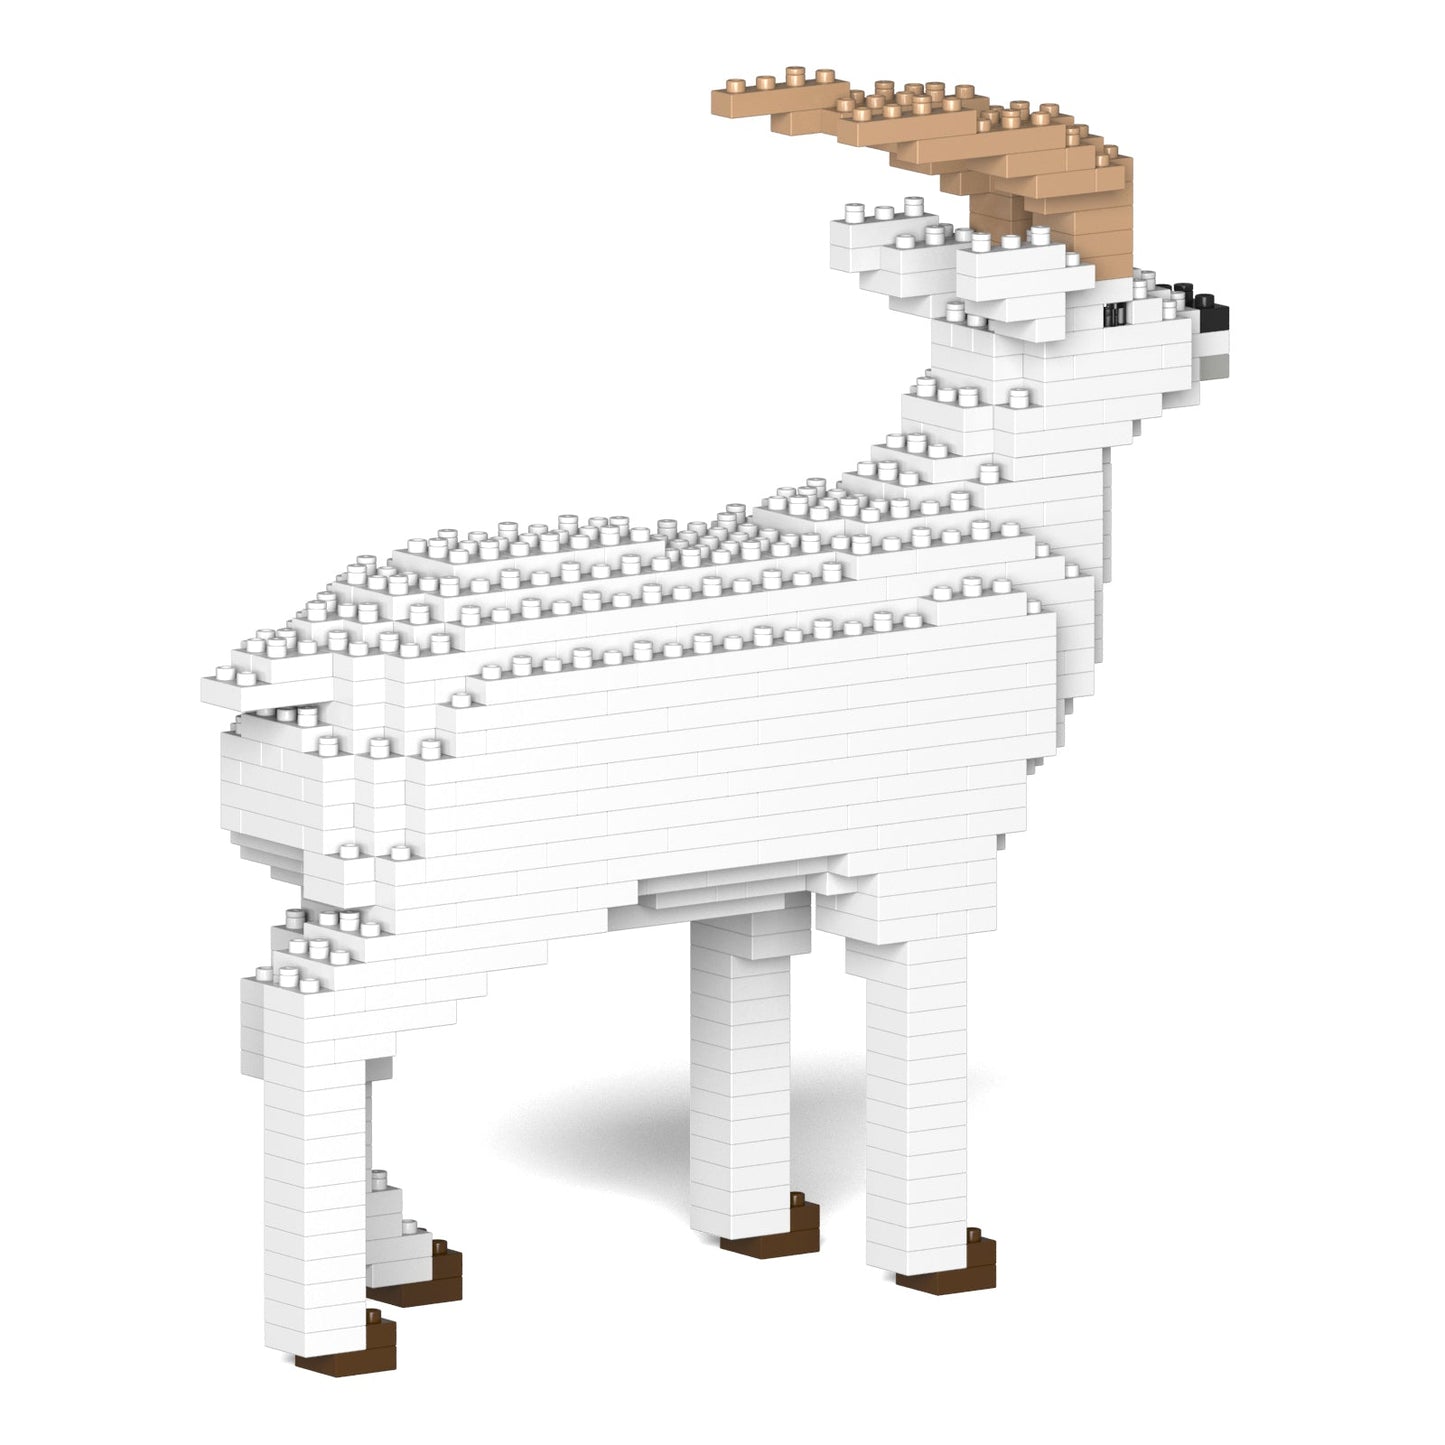 Goat 01